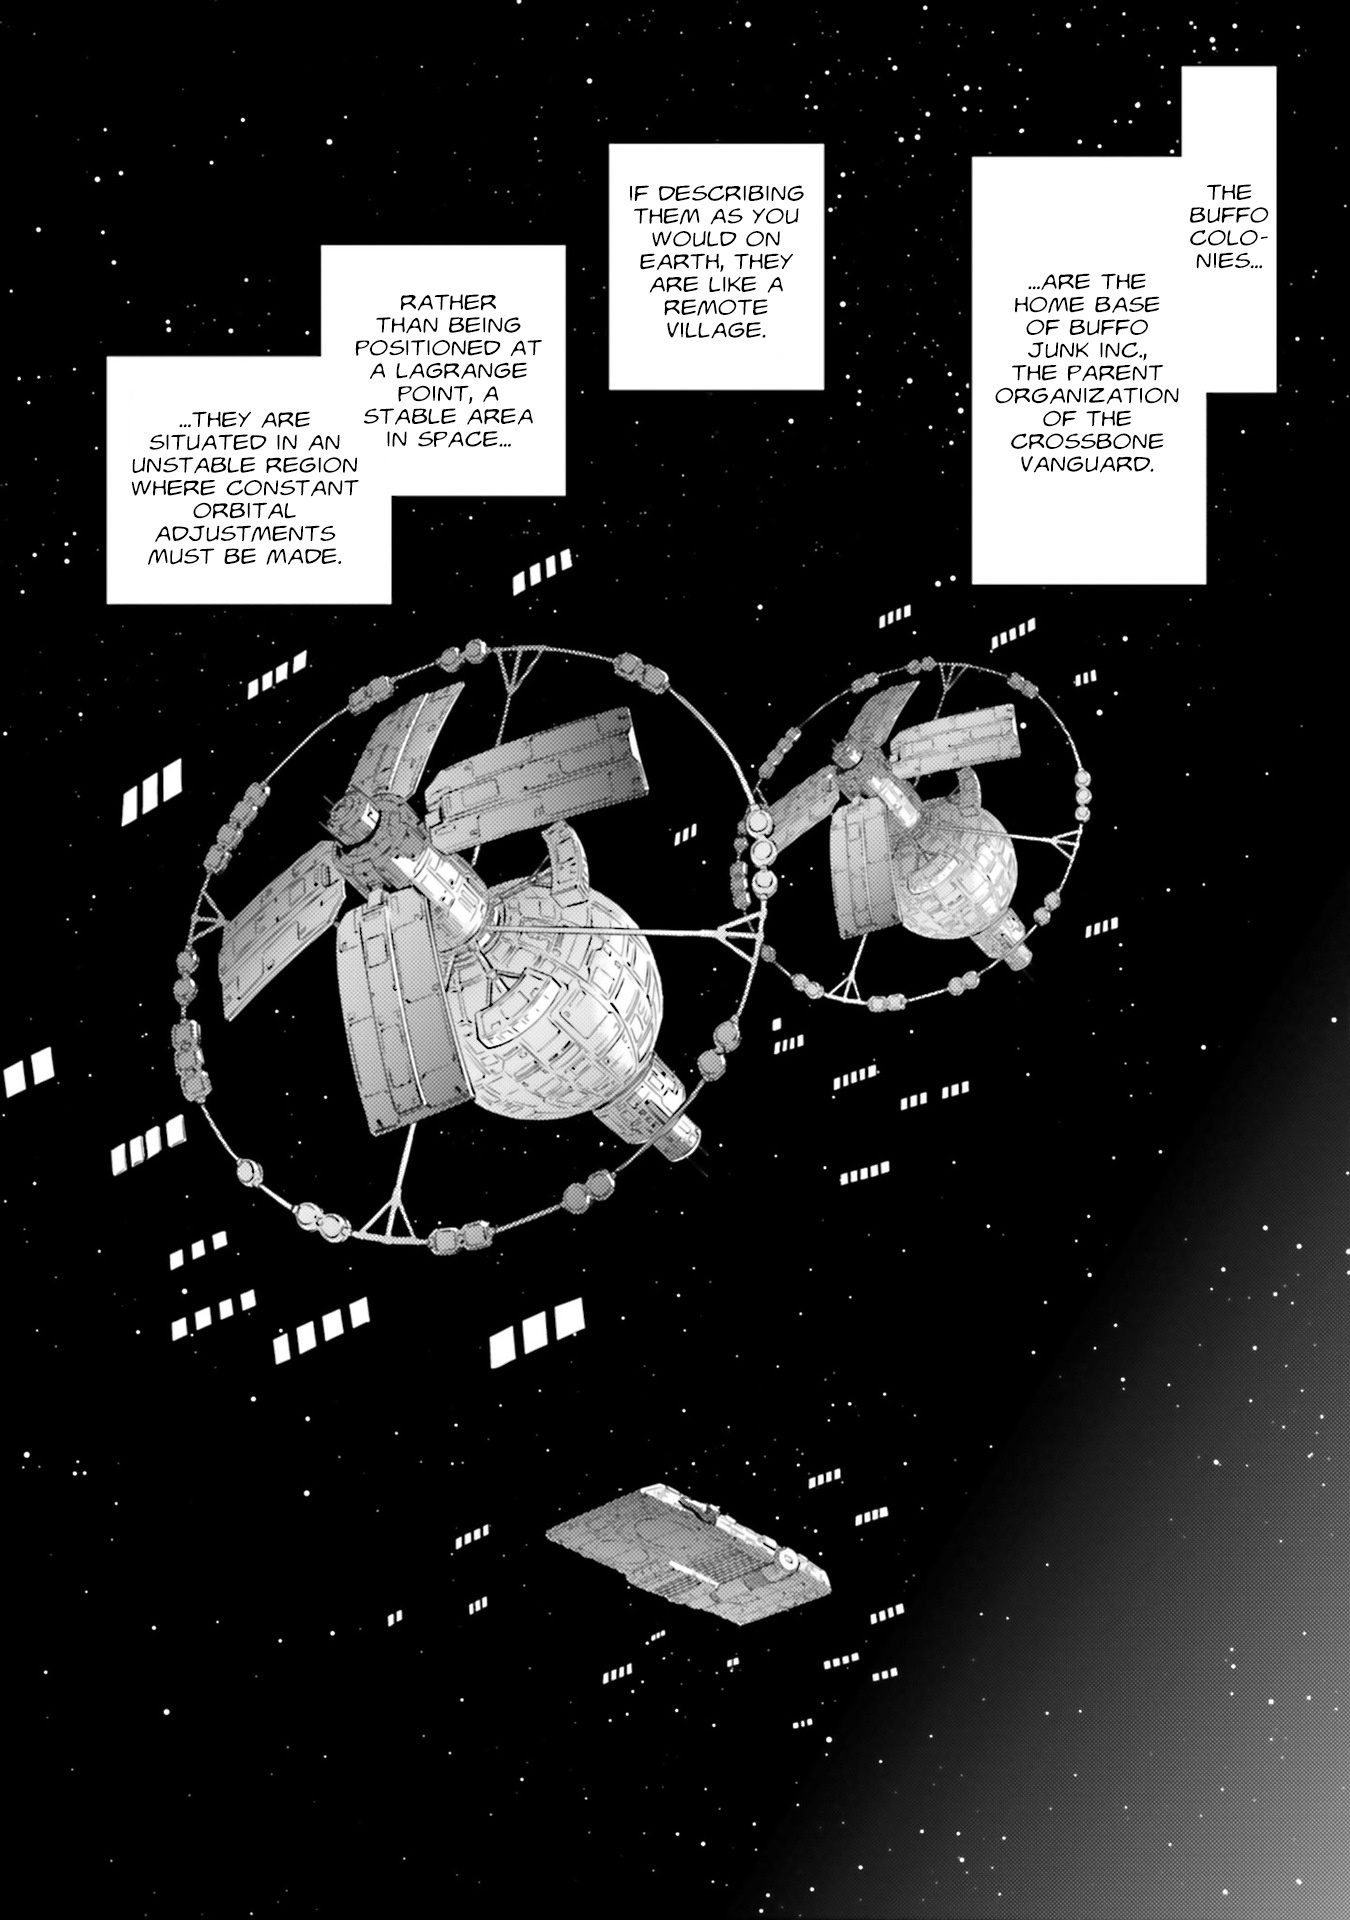 Mobile Suit Gundam F91 Prequel - Page 3